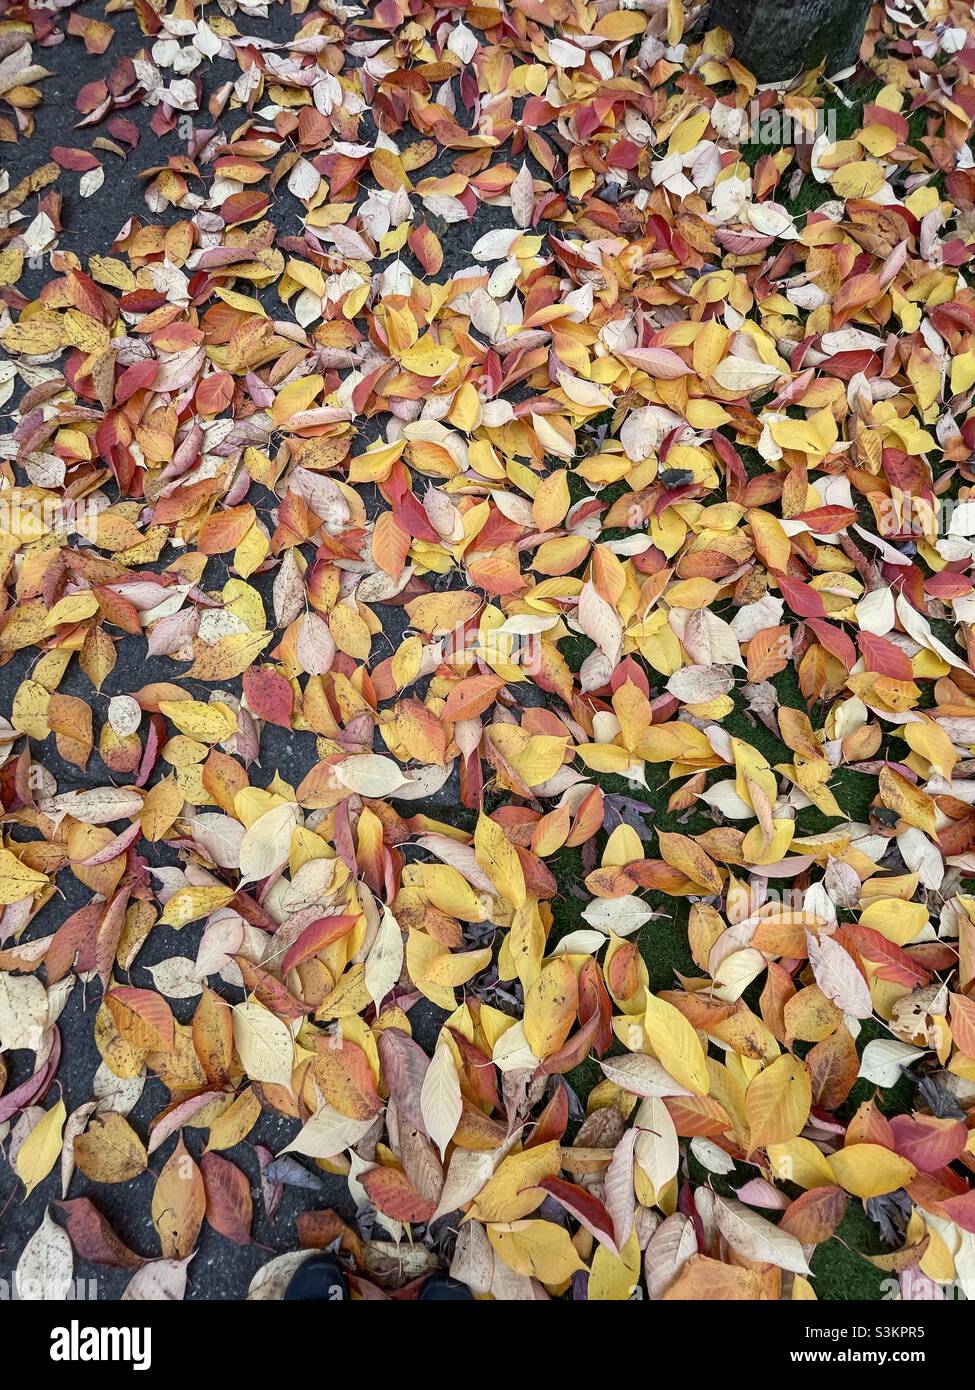 Carpet of autumn leaves Stock Photo